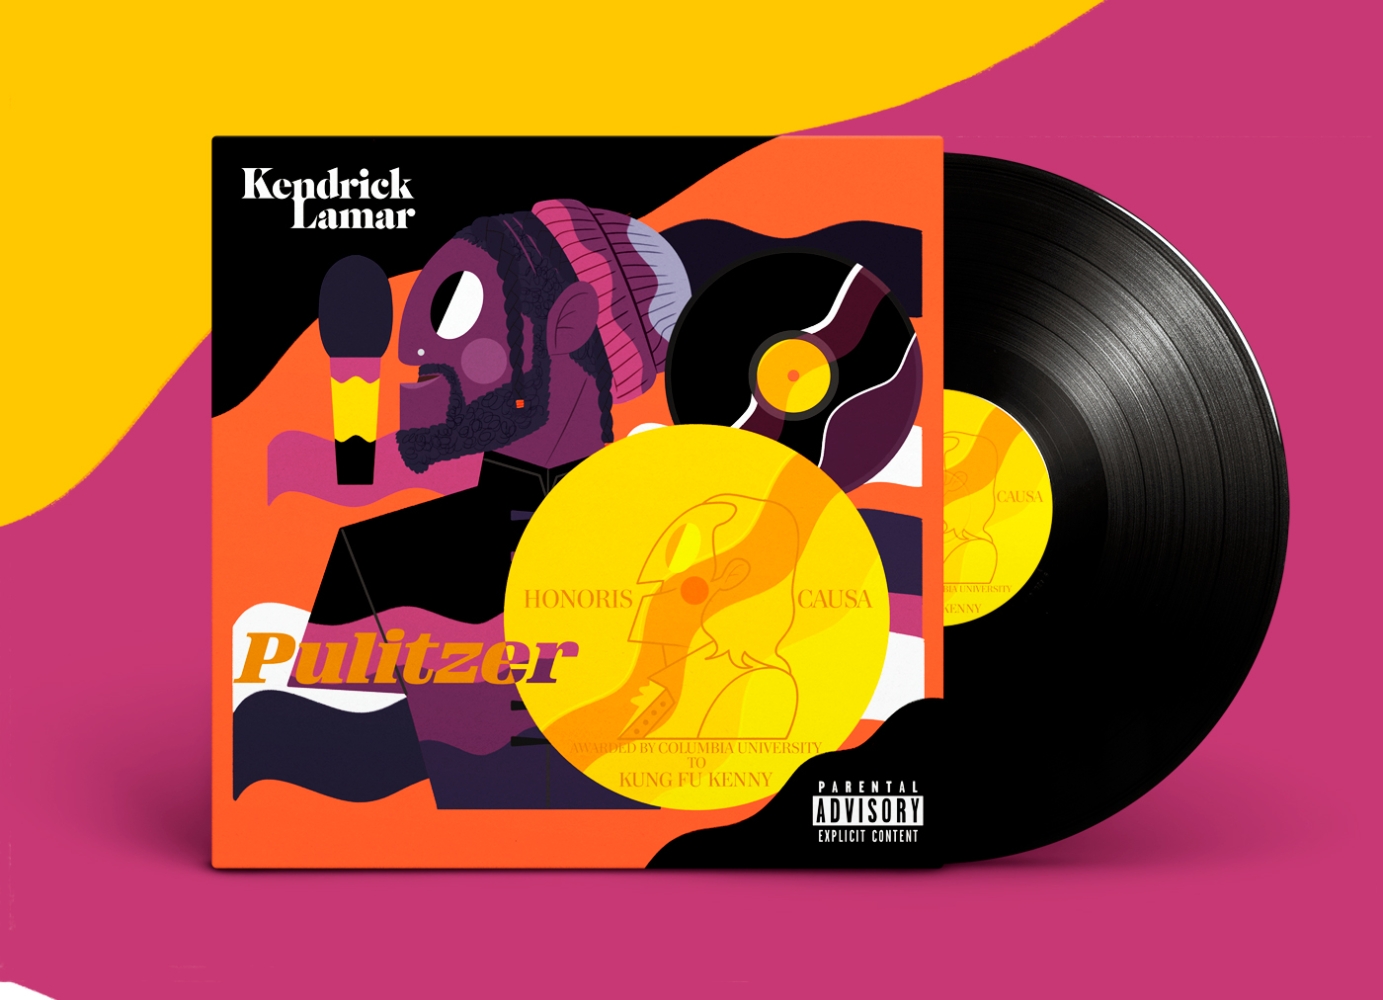 EPKs for Kendrick Lamar by dblackhand